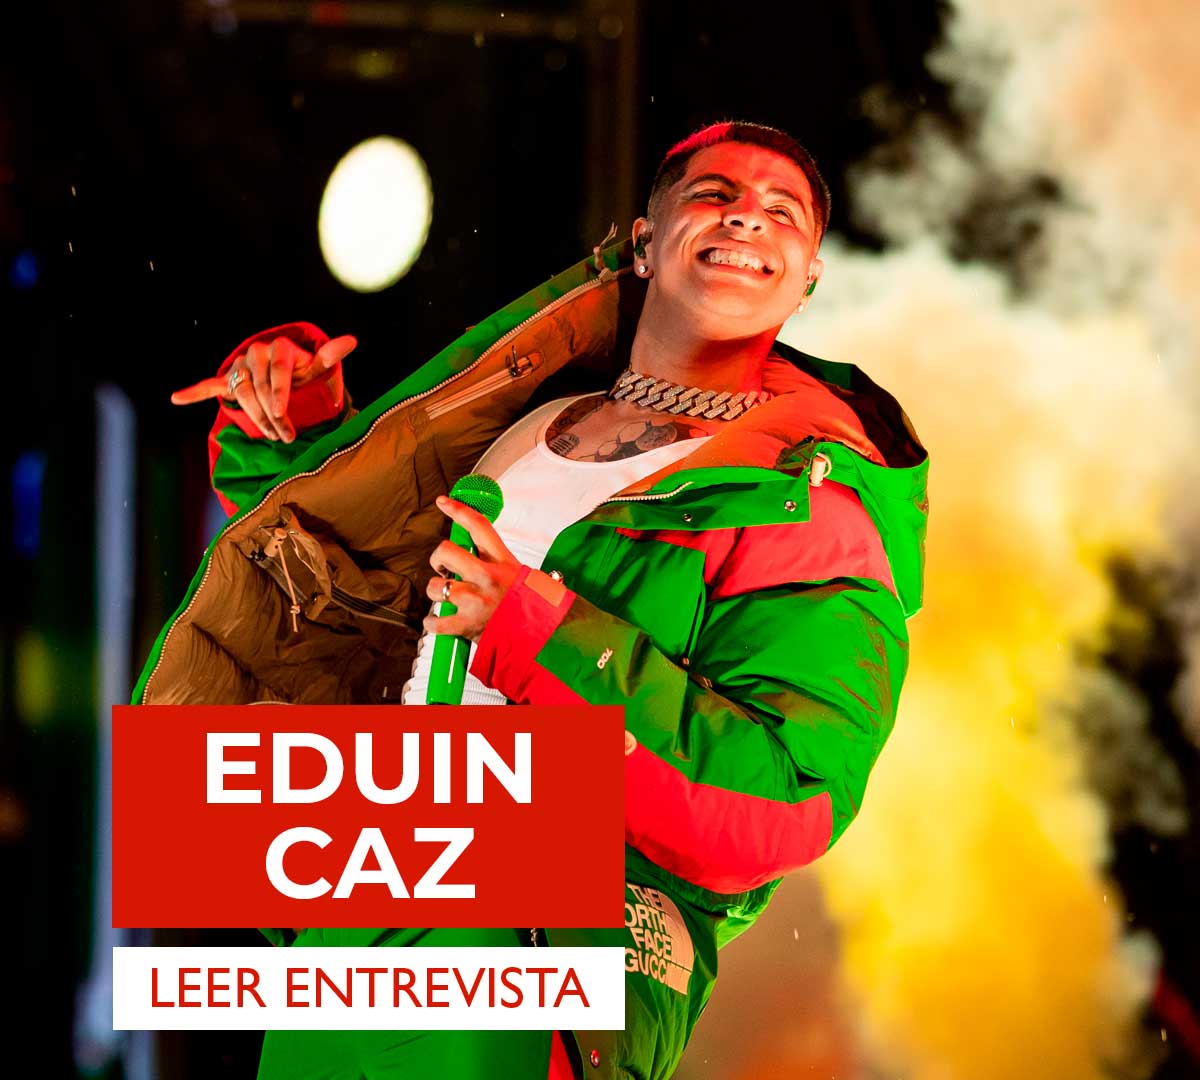 Eduin Caz